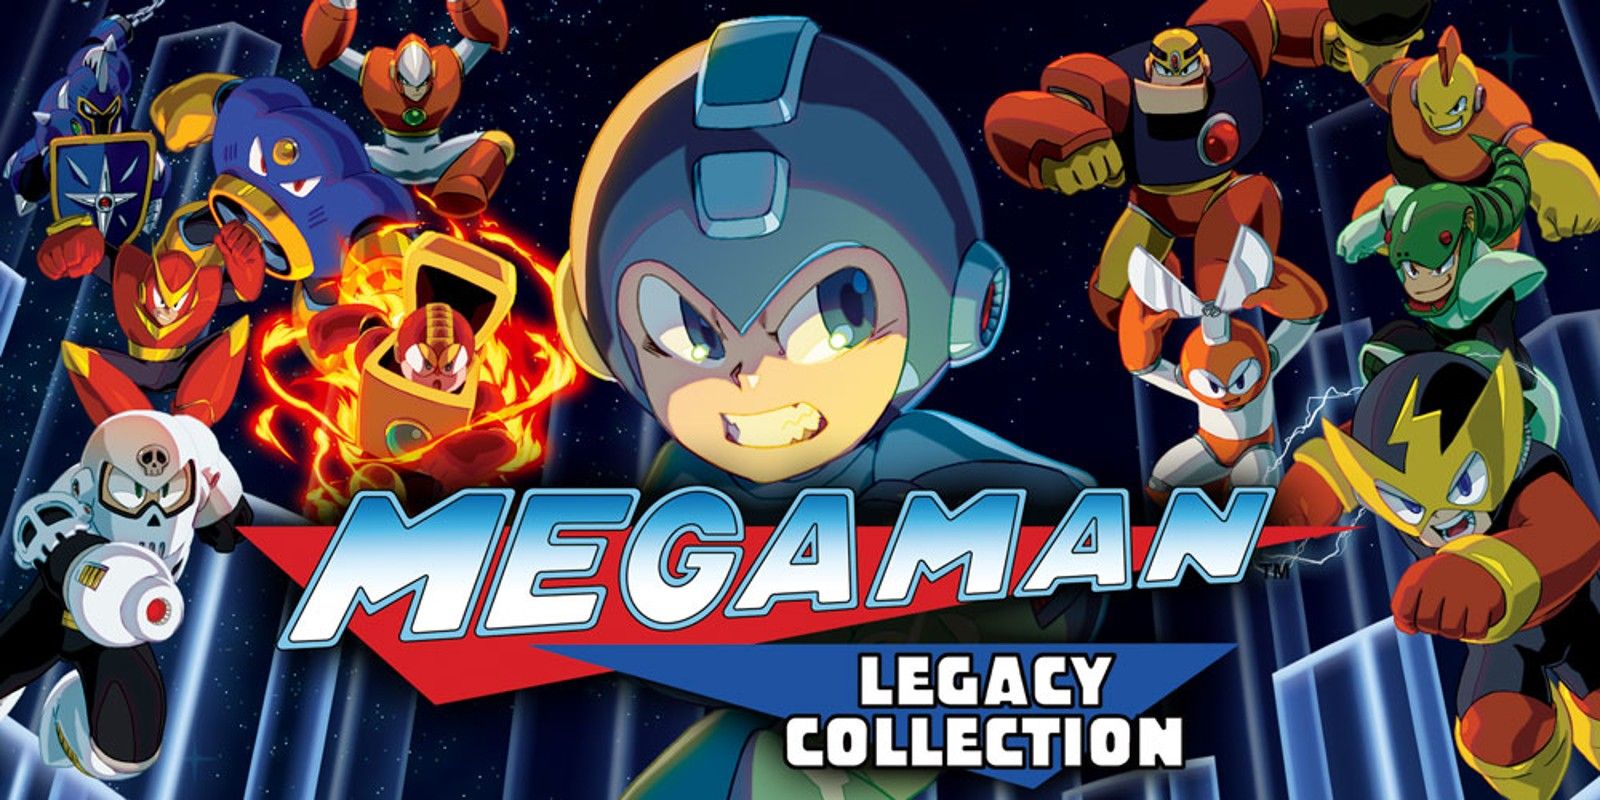 Megaman collection